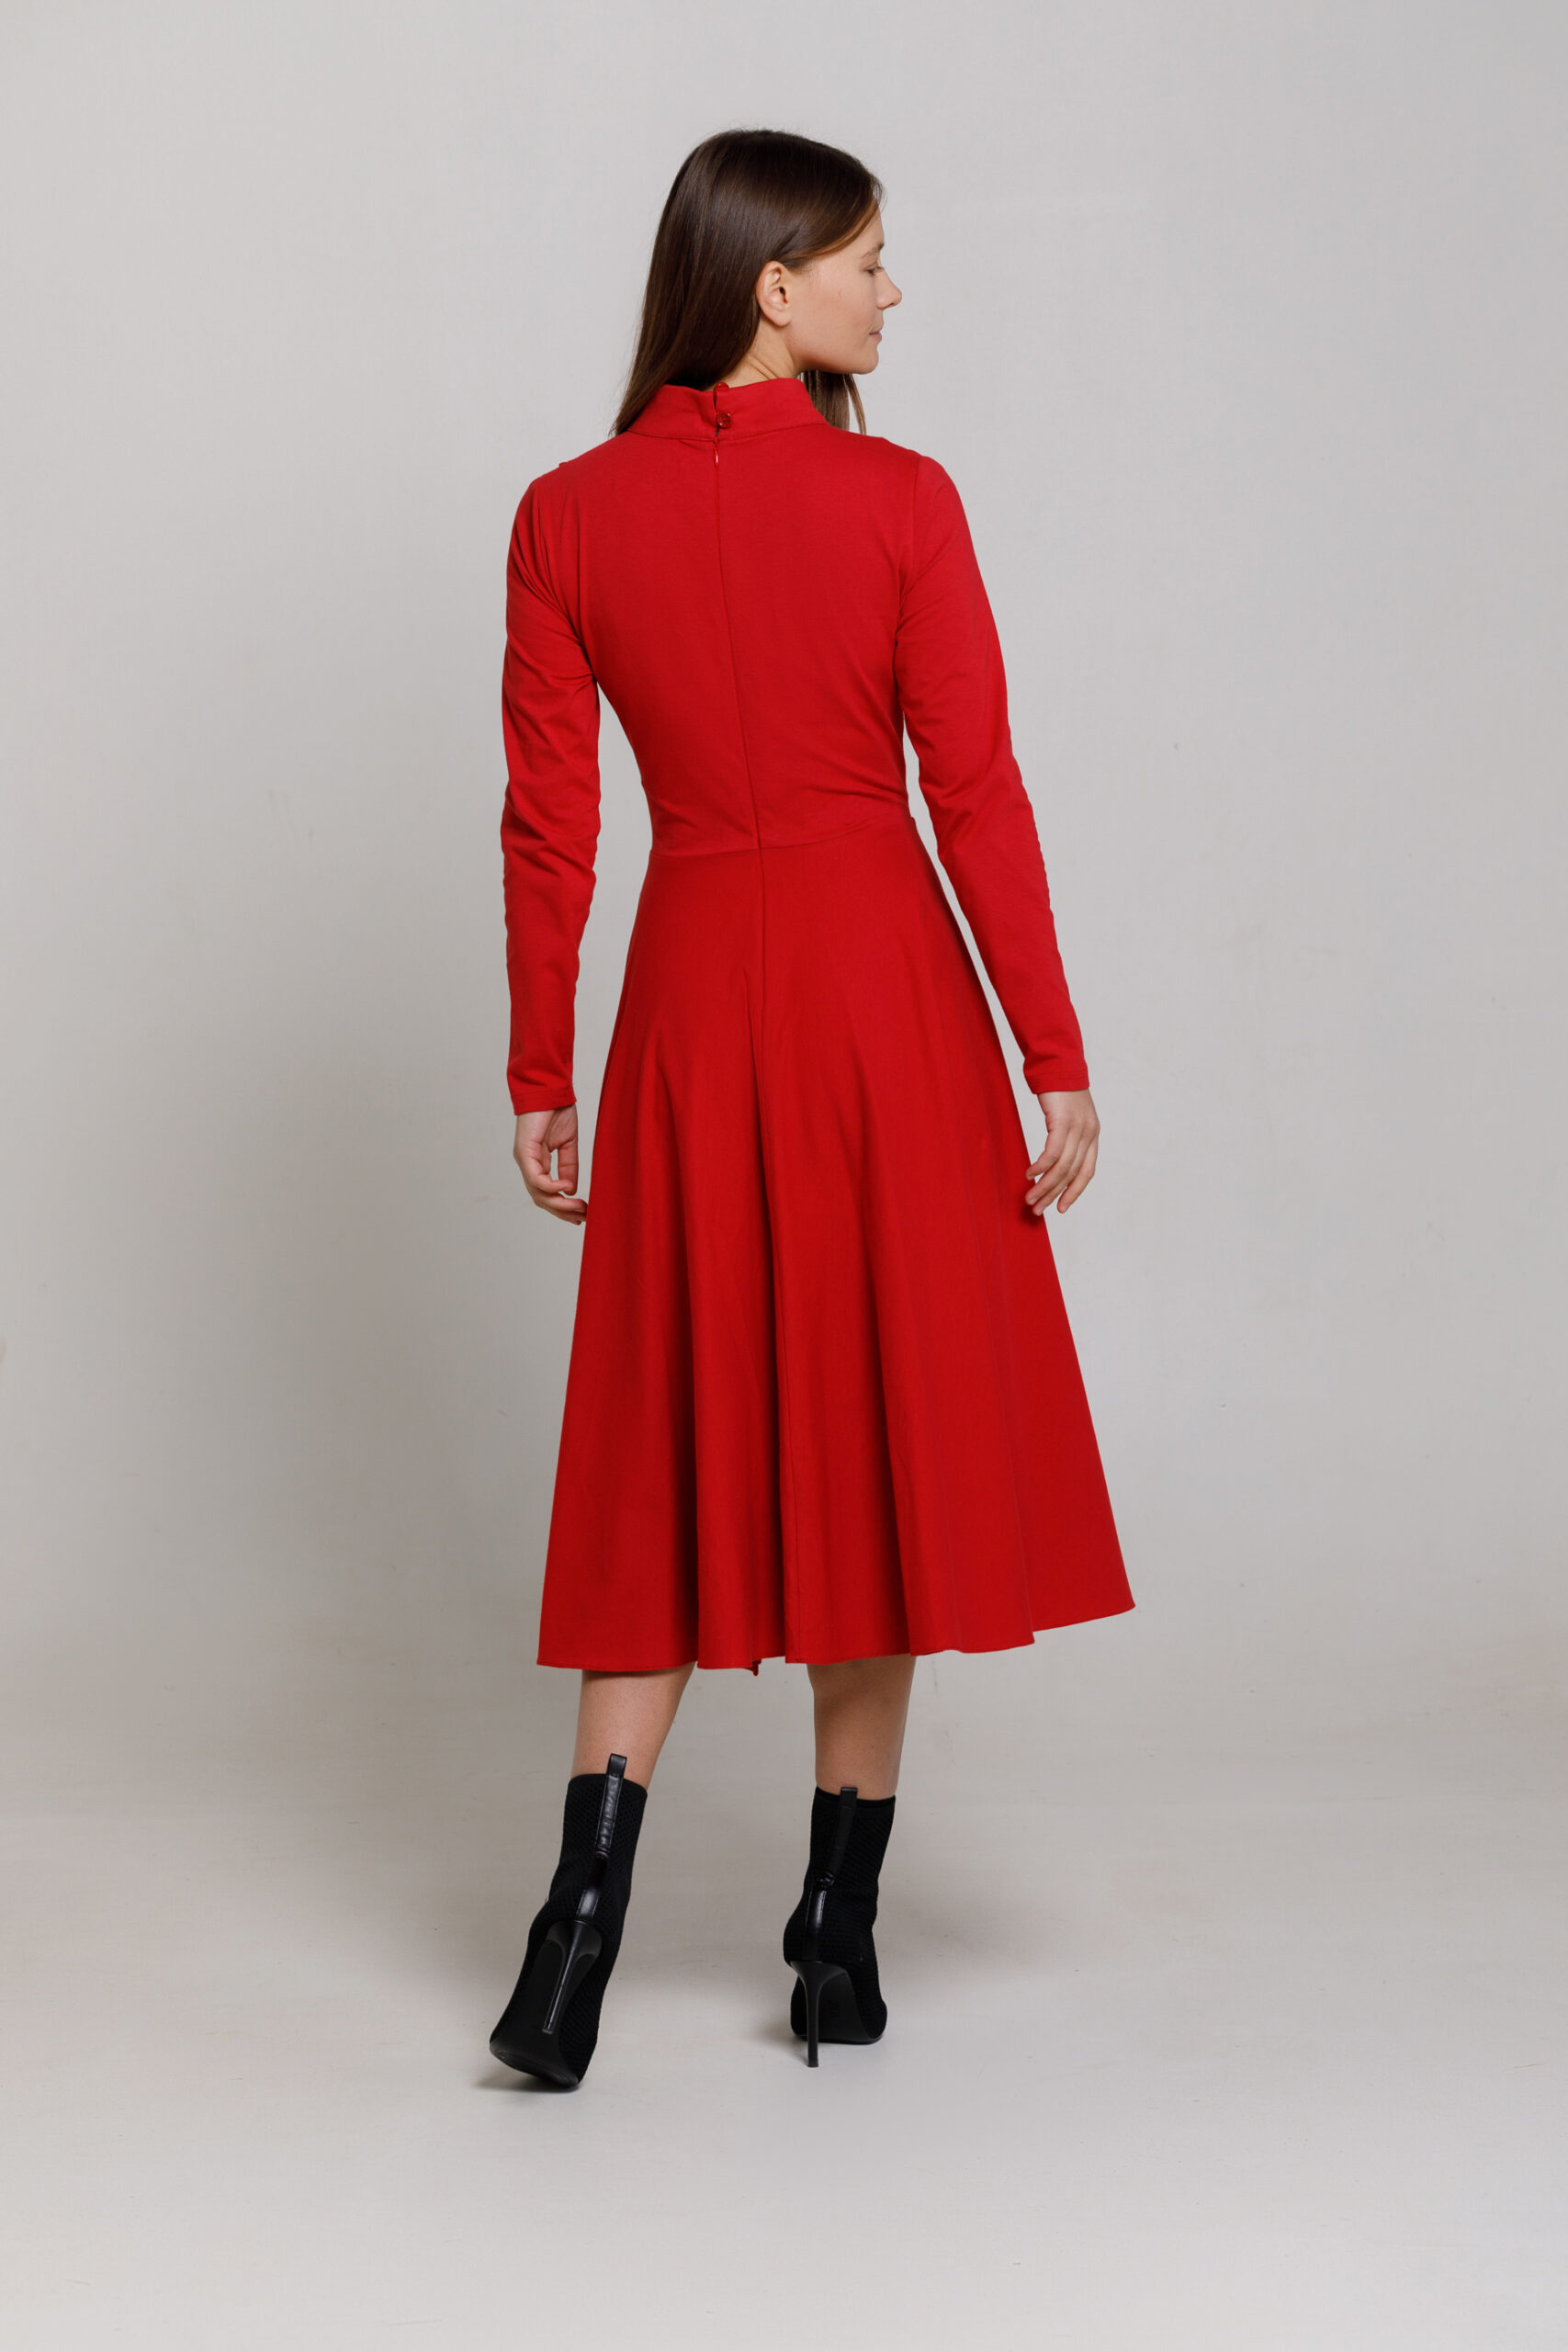 DRESS RYLEI red casual jersey. Natural fabrics, original design, handmade embroidery